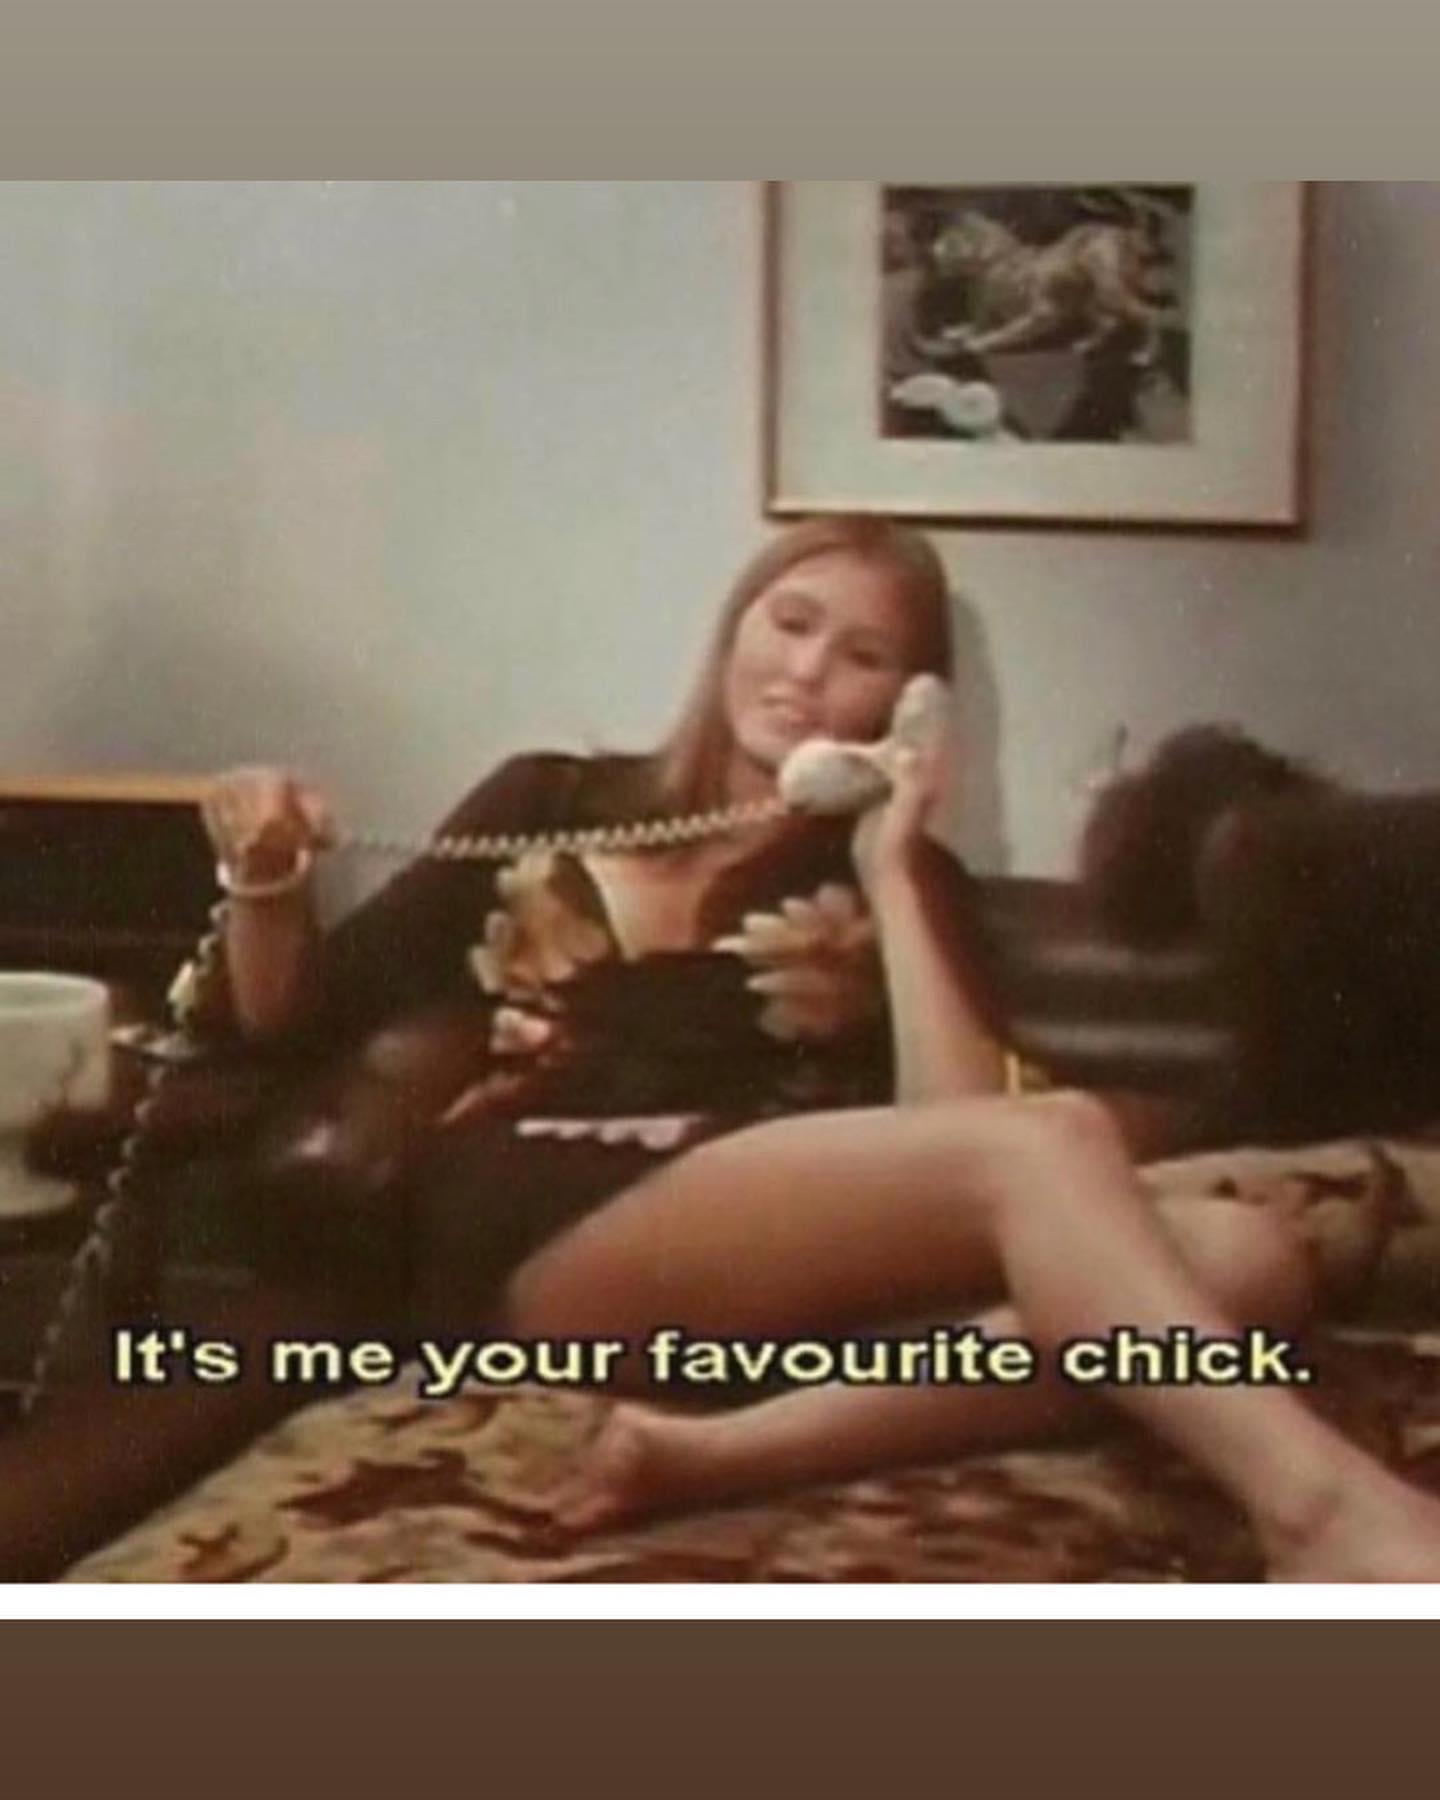 Carly Lawrence "favorite chick" screengrab